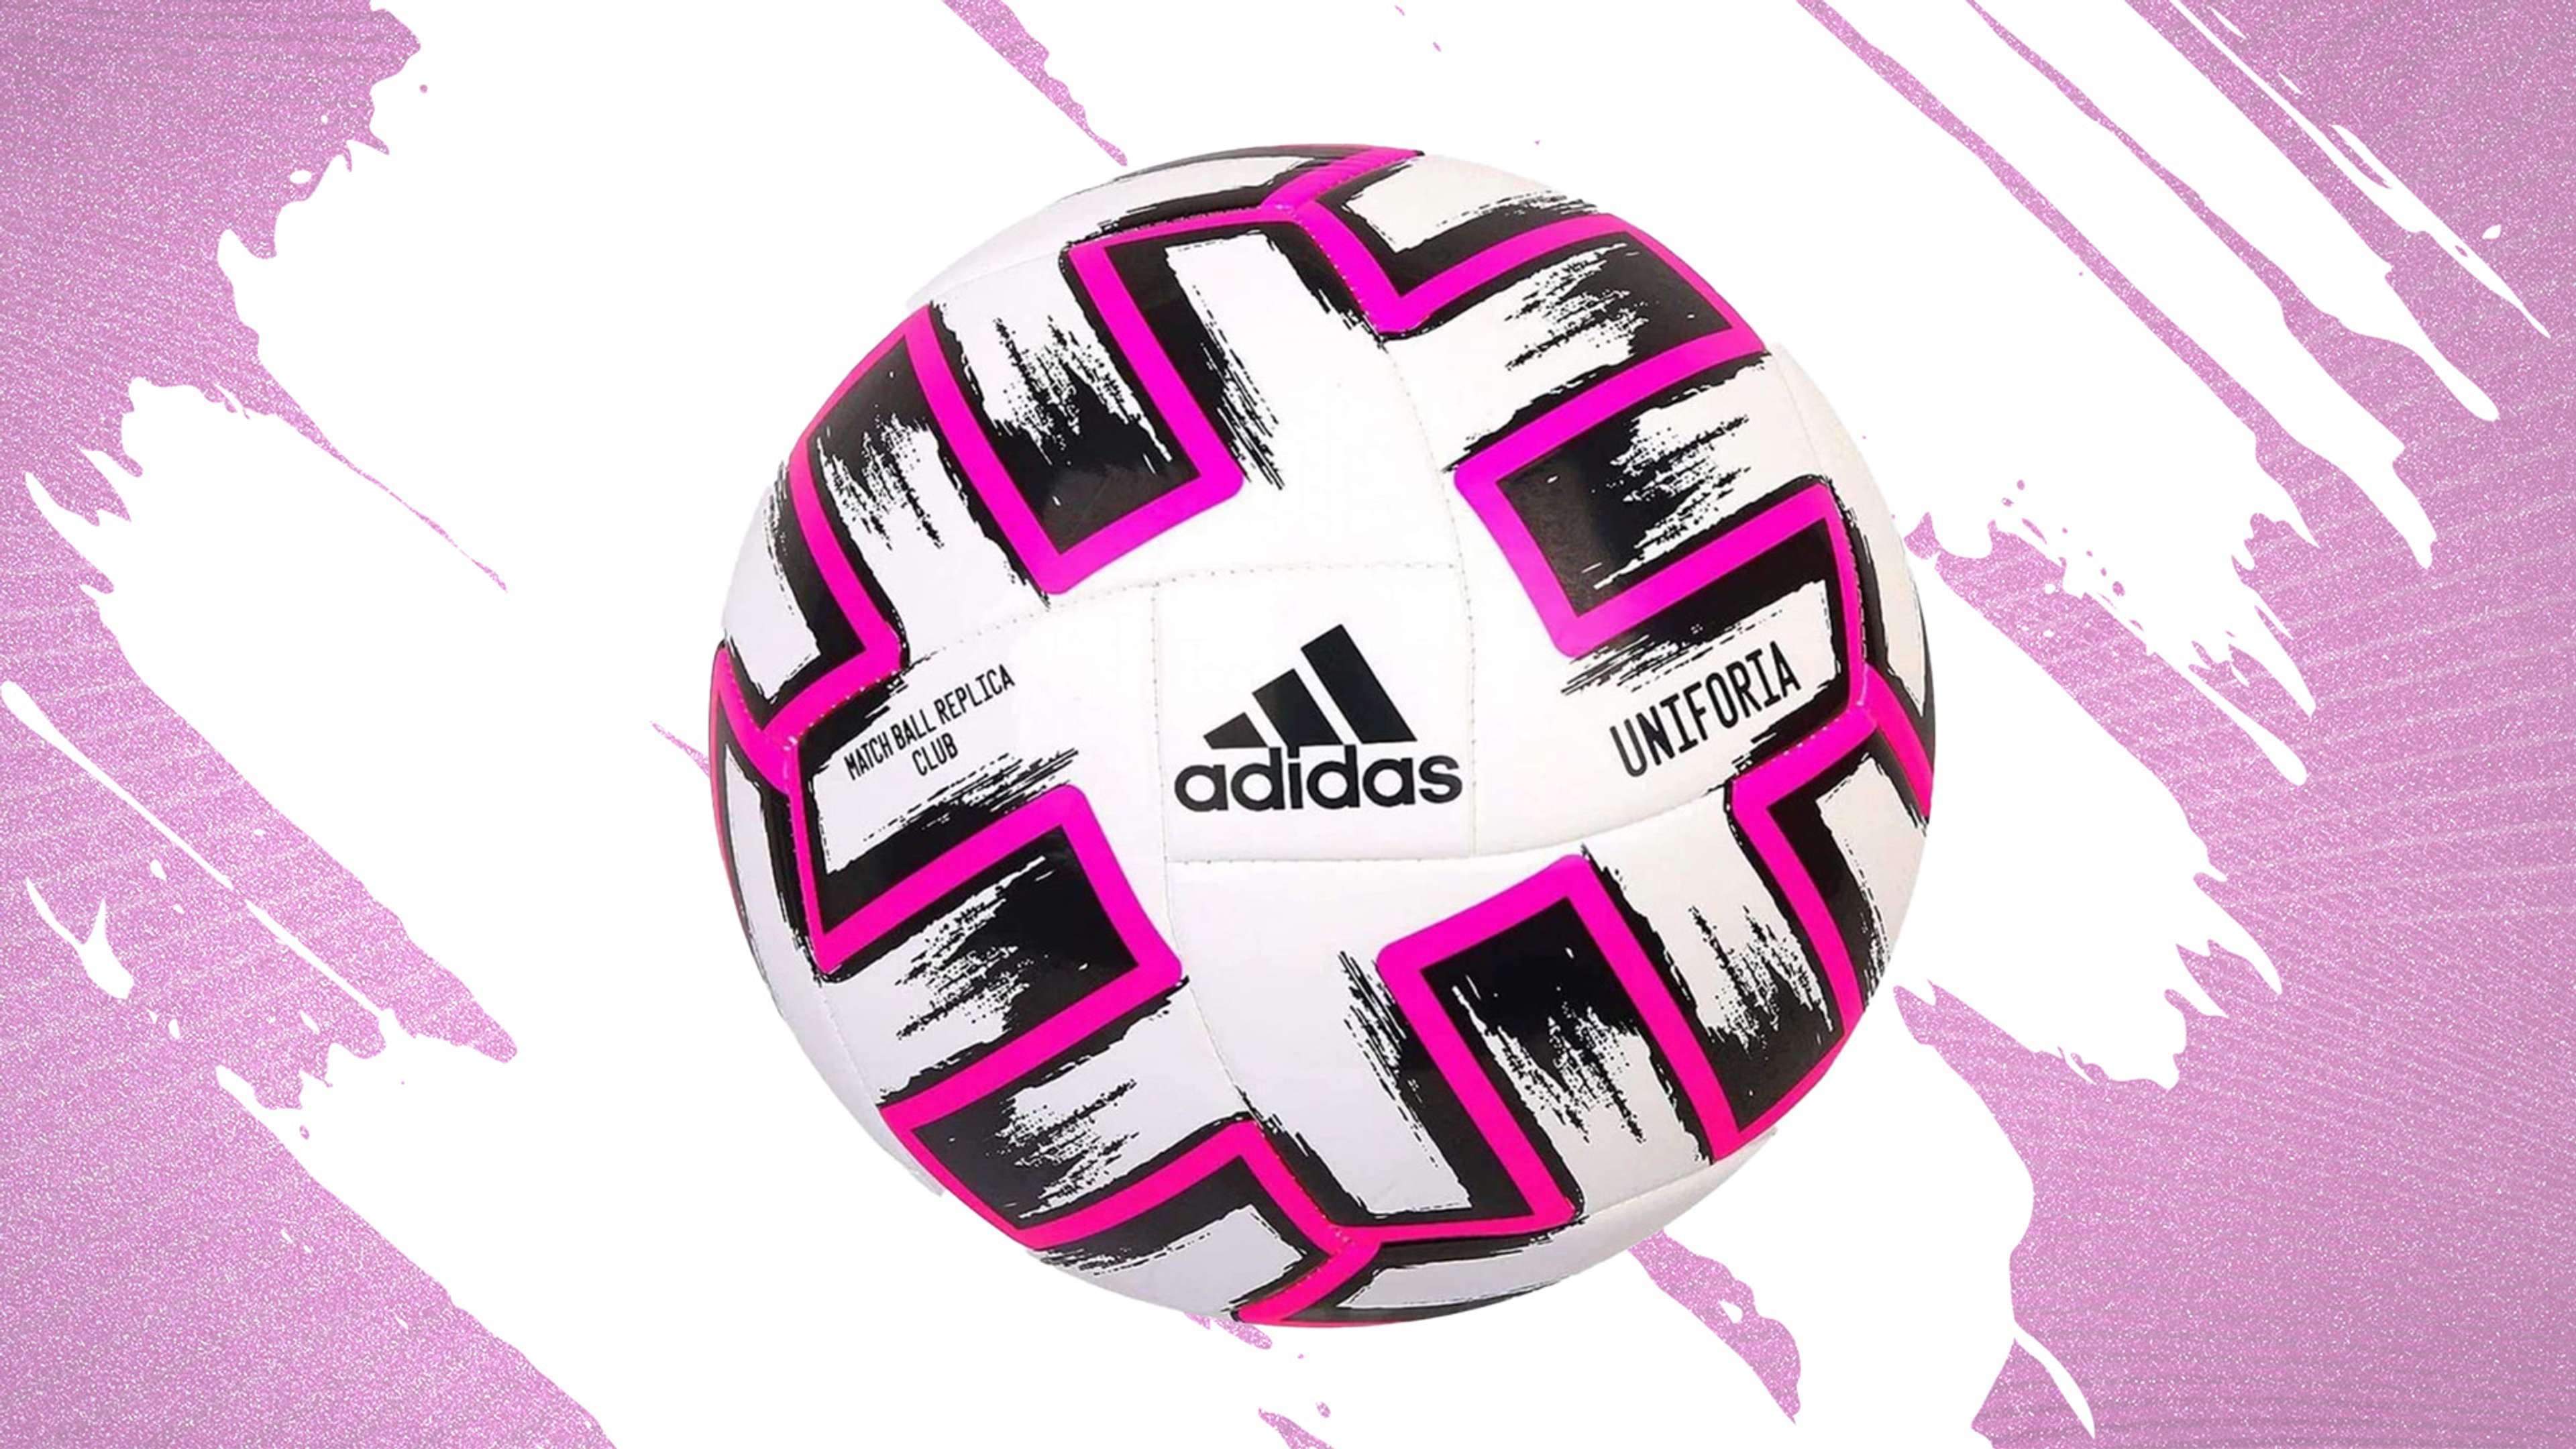 Adidas Unifora ball 